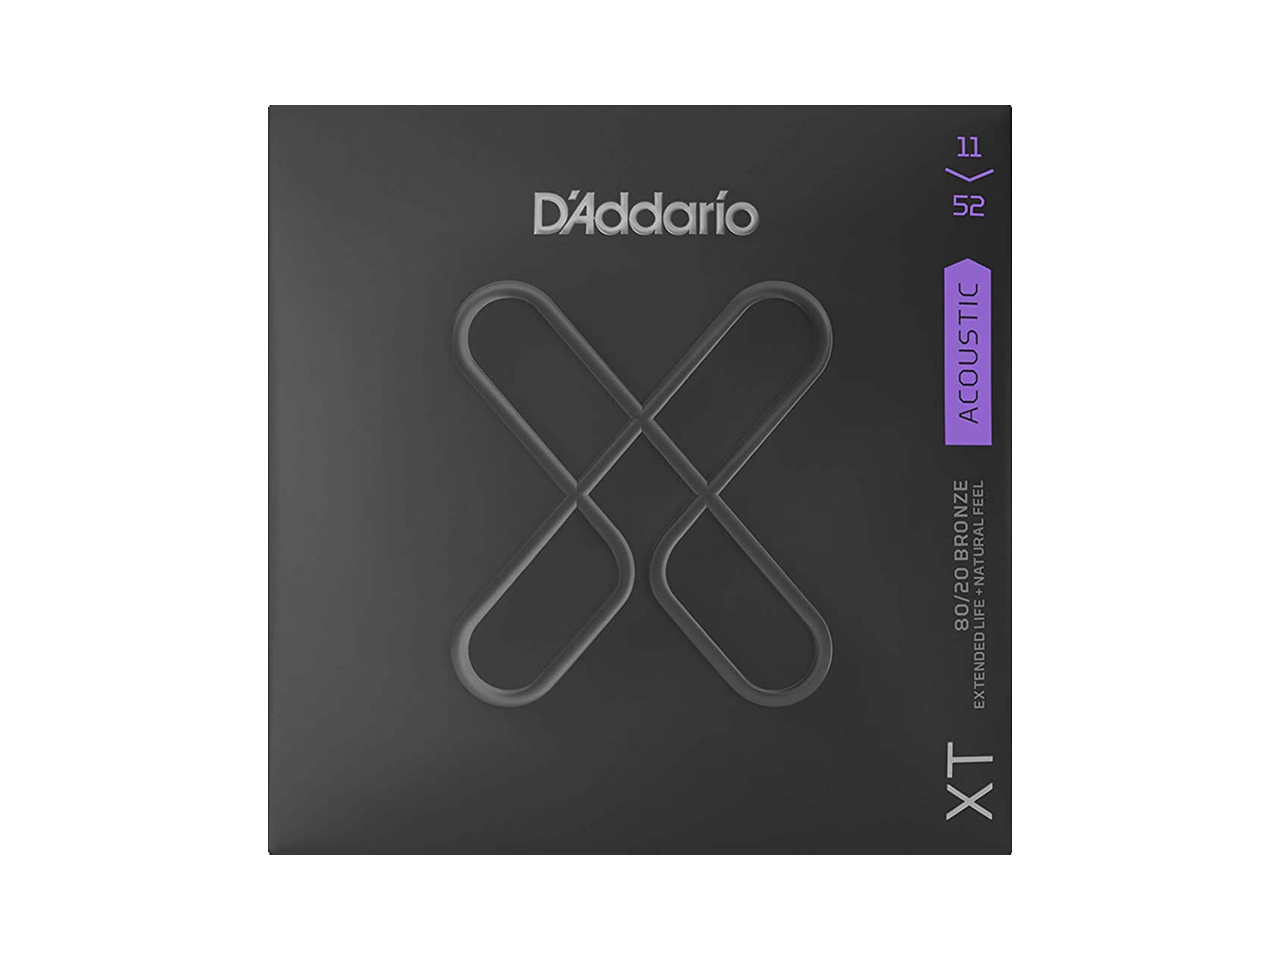 D'Addario(ダダリオ) XT ACOUSTIC 80/20 BRONZE, CUSTOM LIGHT / XTABR1152 (アコースティックギター弦)